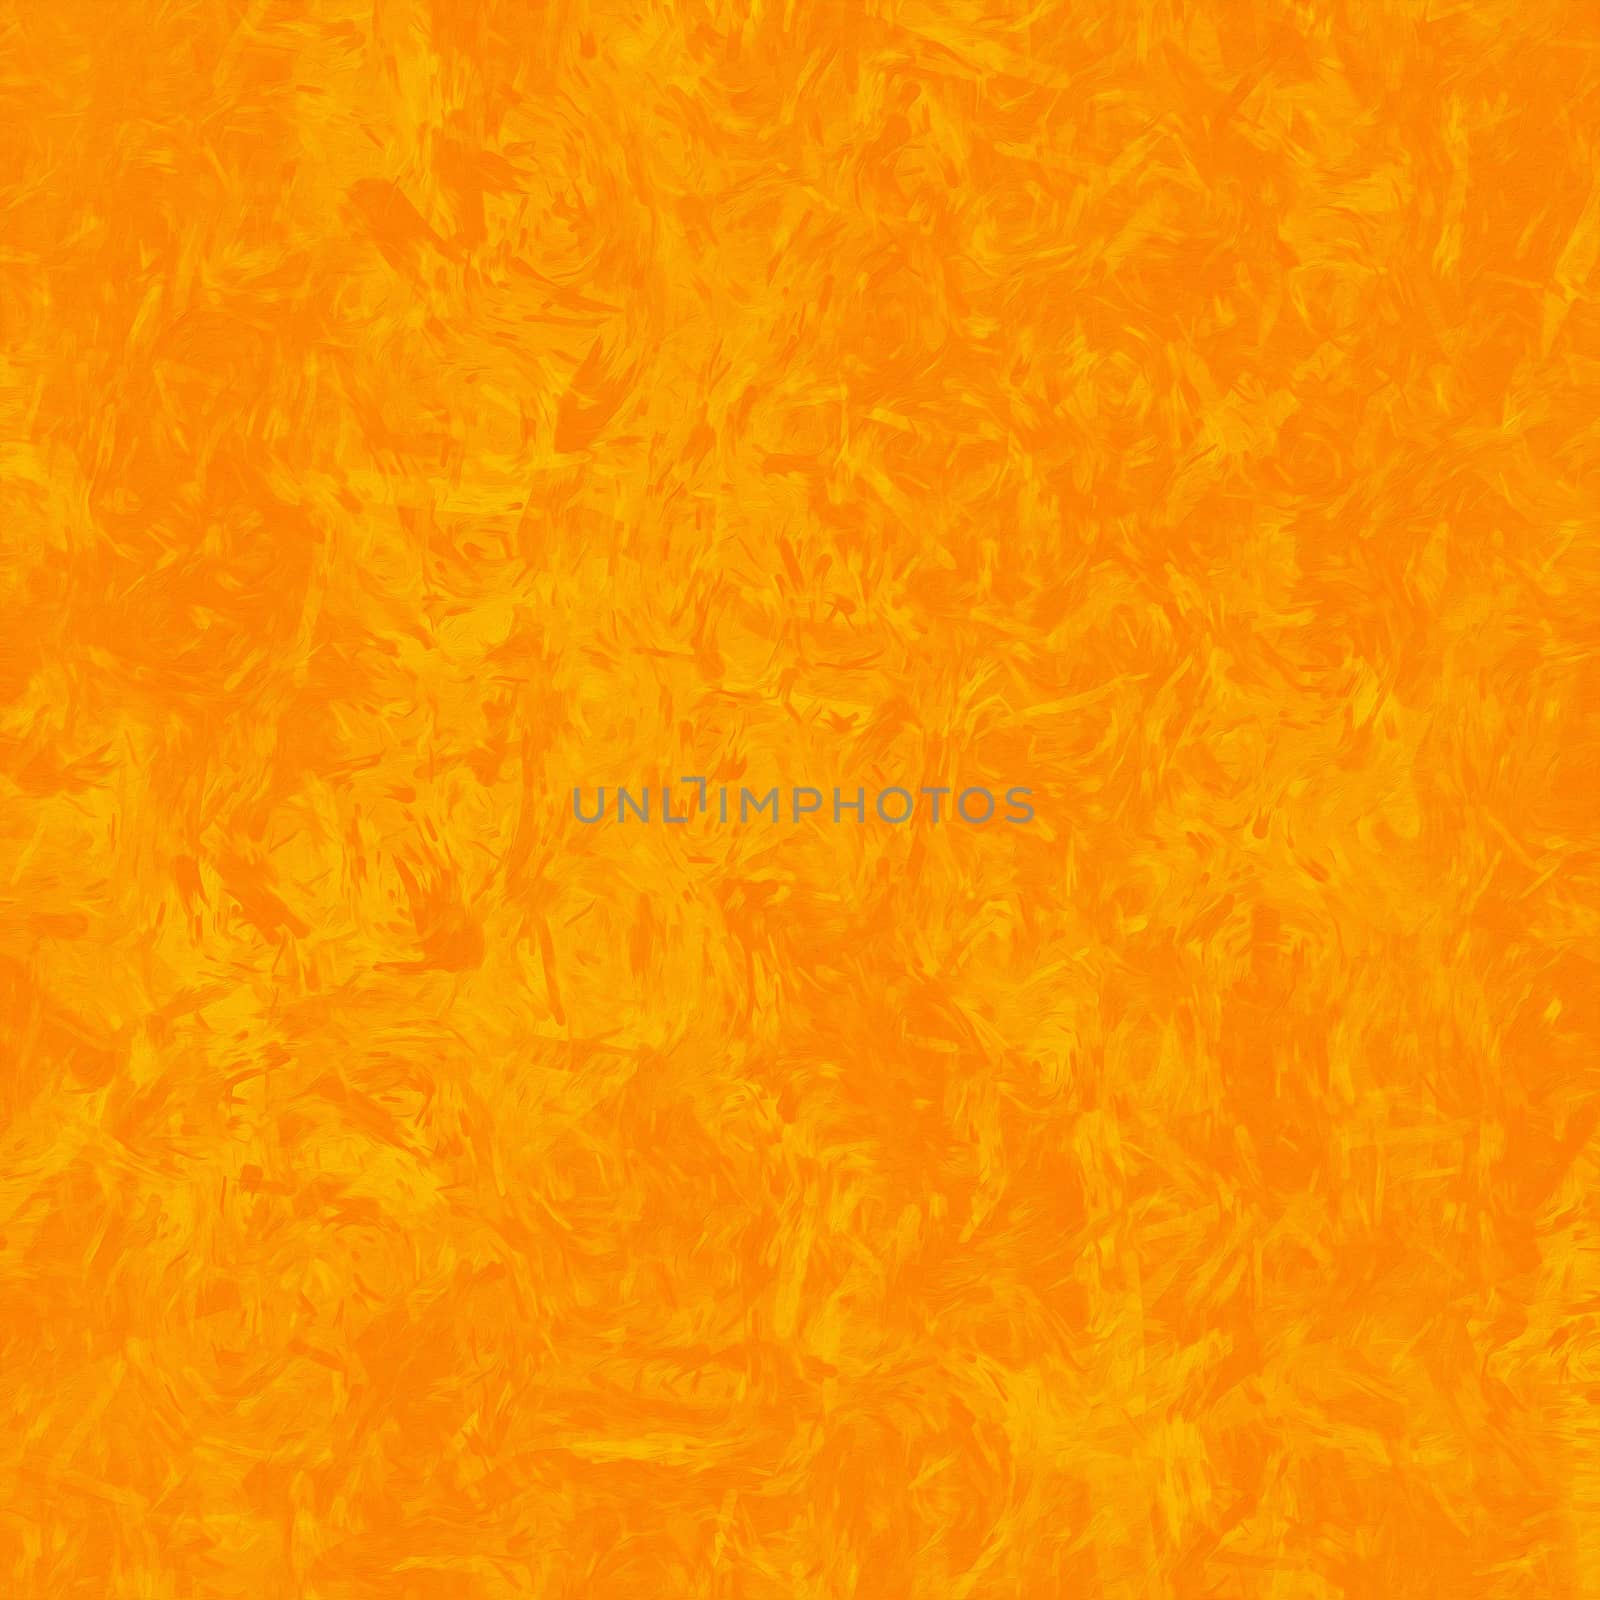 2D illustration of a orange brush strokes background